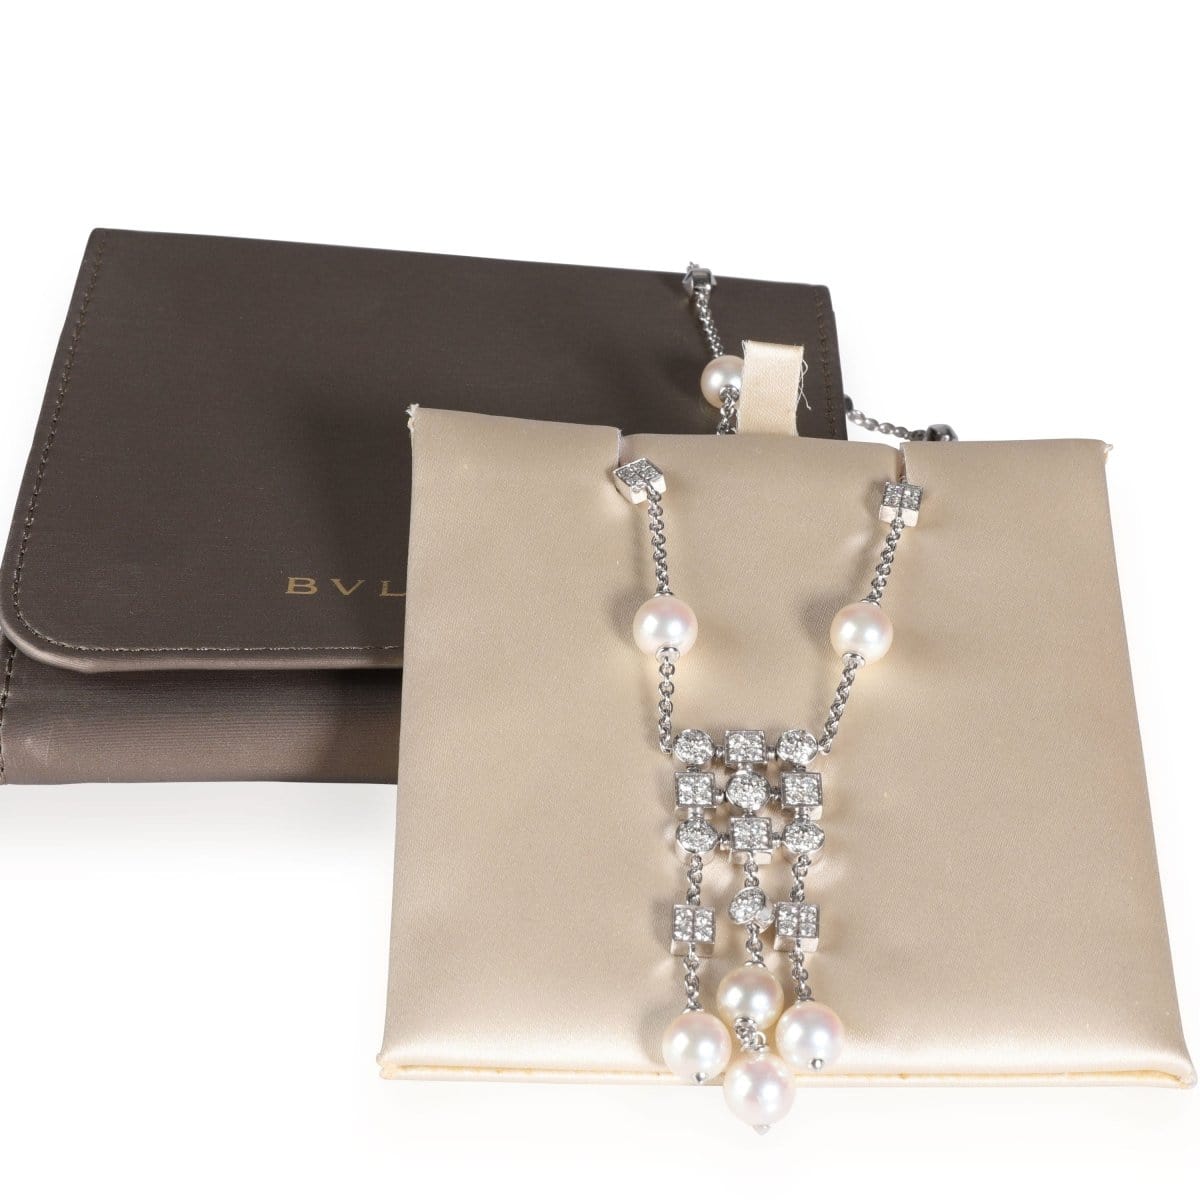 111785, BVLGARI Lucea Pearl & Diamond Drop Necklace in 18K White Gold 1.56 CTW